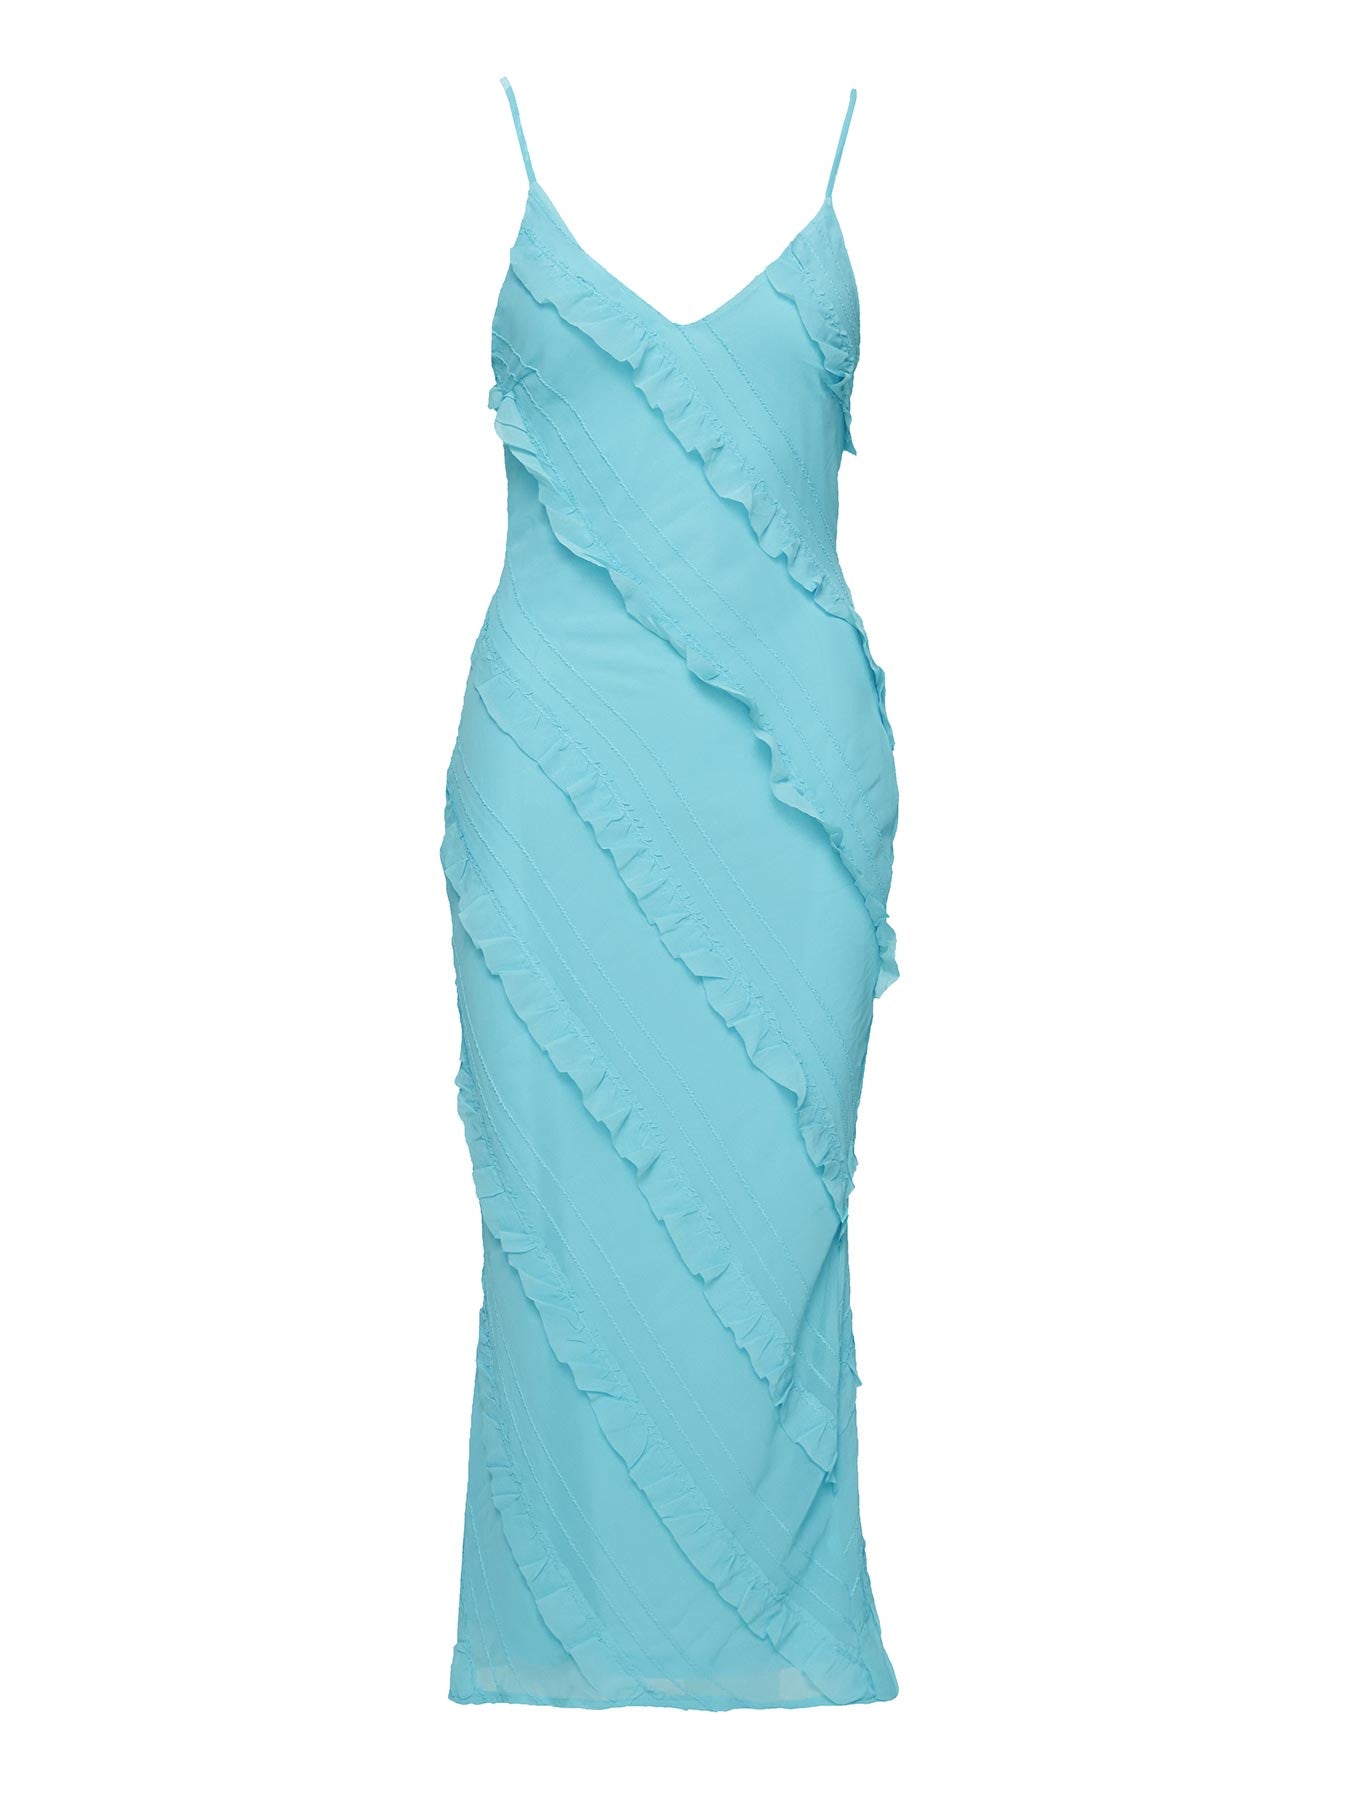 Shop Formal Dress - Lars Maxi Dress Turquoise third image